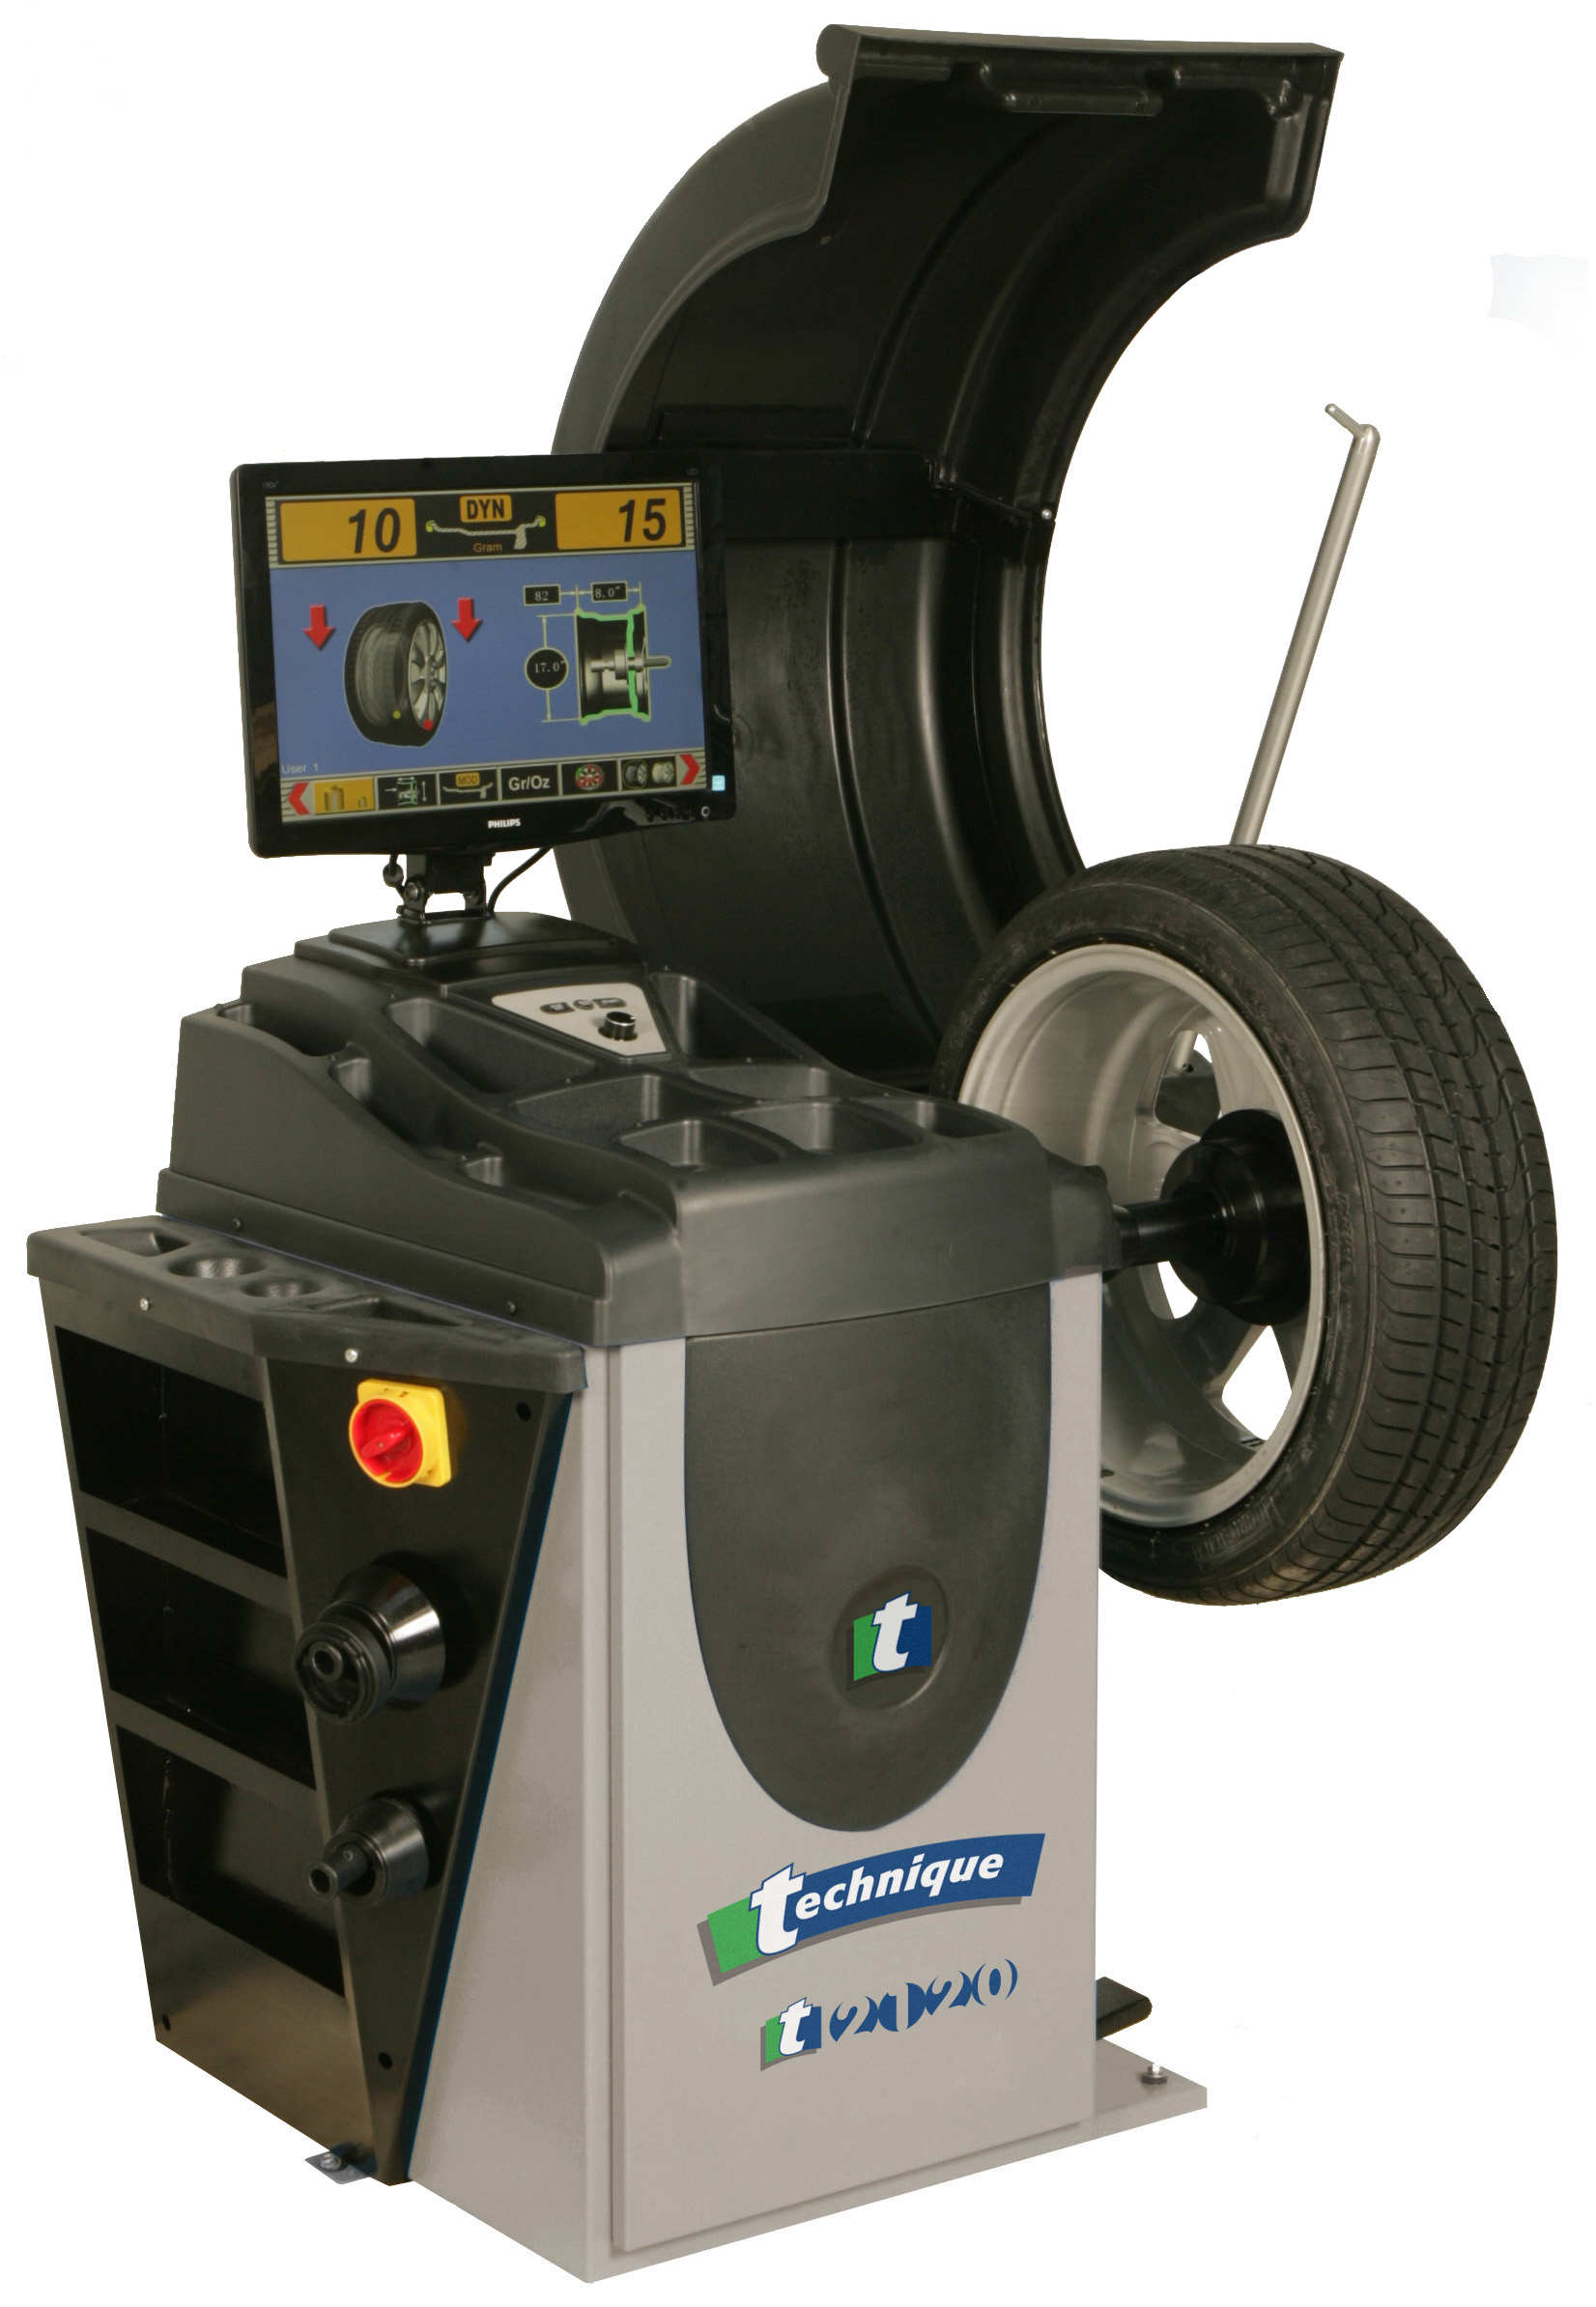 Trade Garage Equipment's Technique T2120 wheel balancer